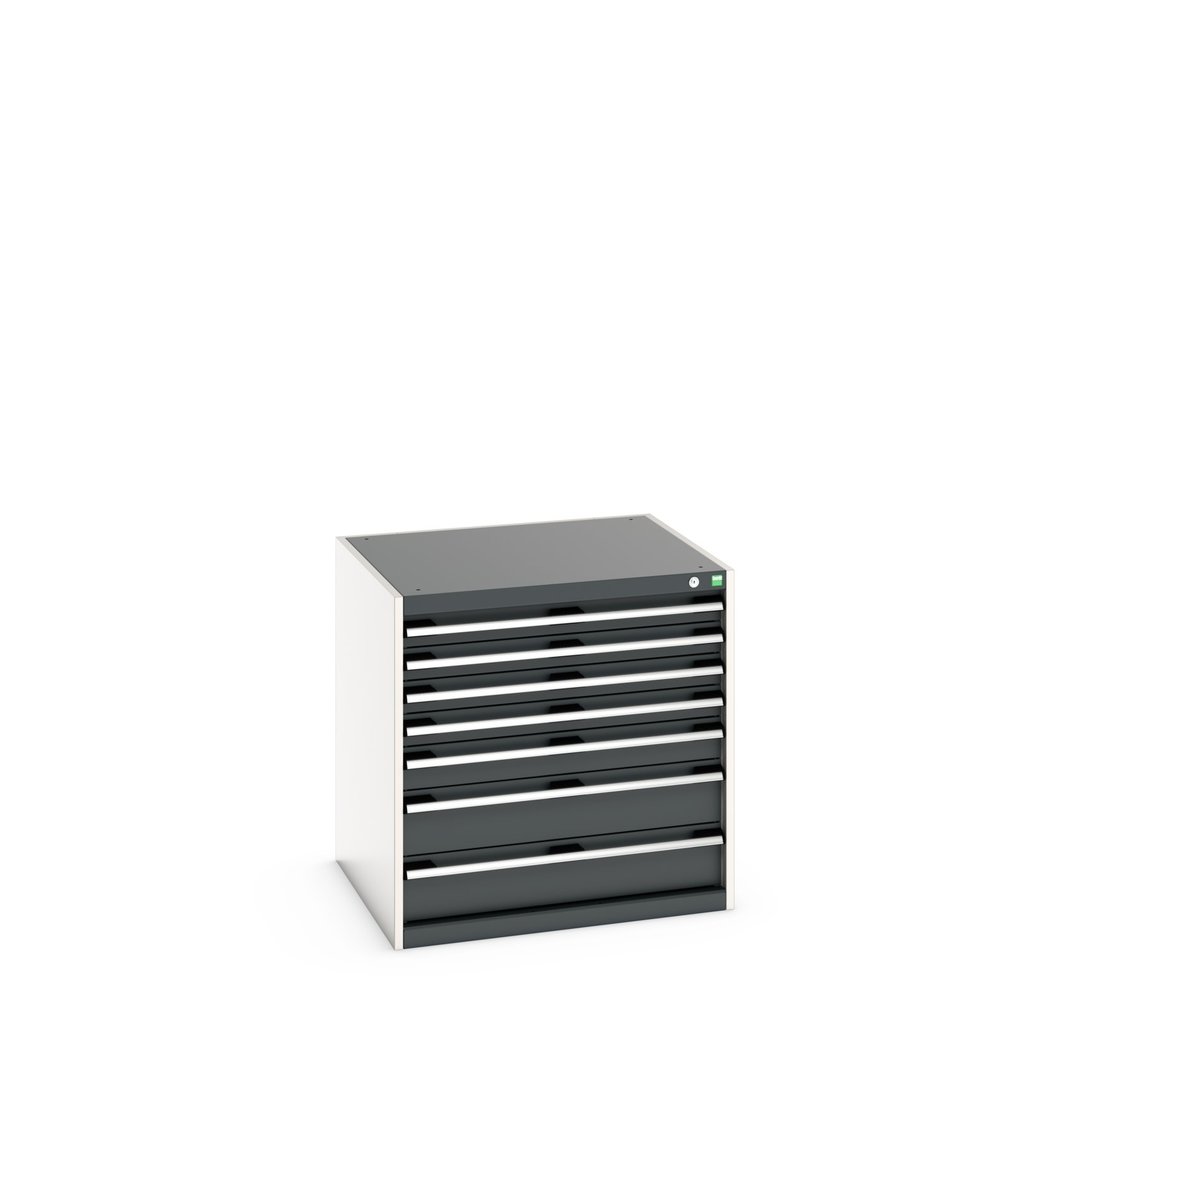 40028100. - cubio drawer cabinet